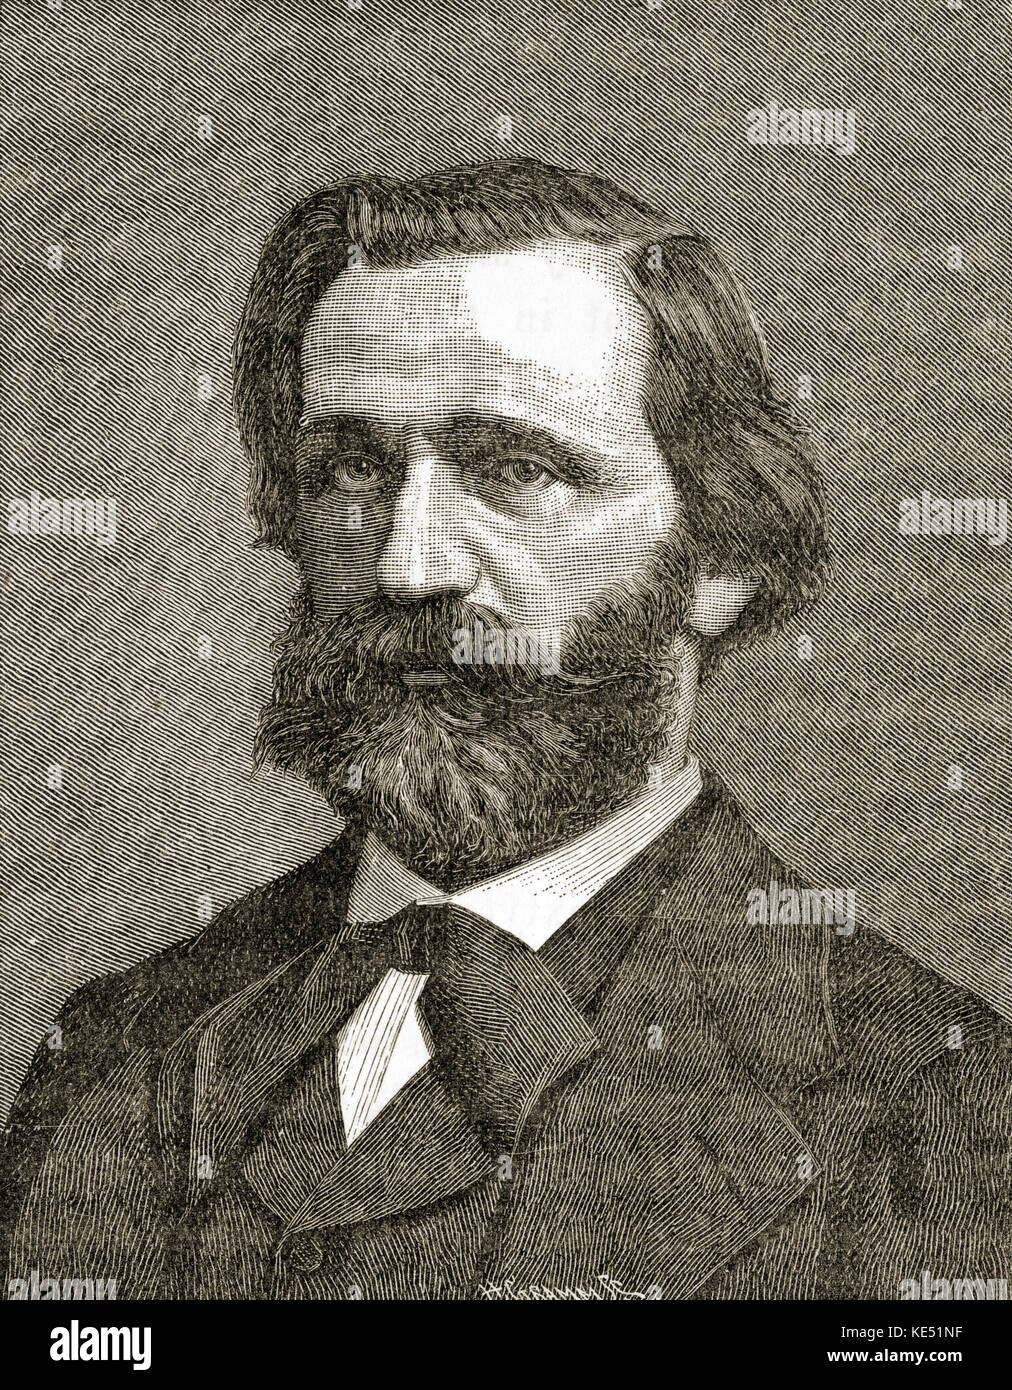 Giuseppe Verdi - portrait of the Italian composer. 10 October 1813 - 27 January 1901. Stock Photo